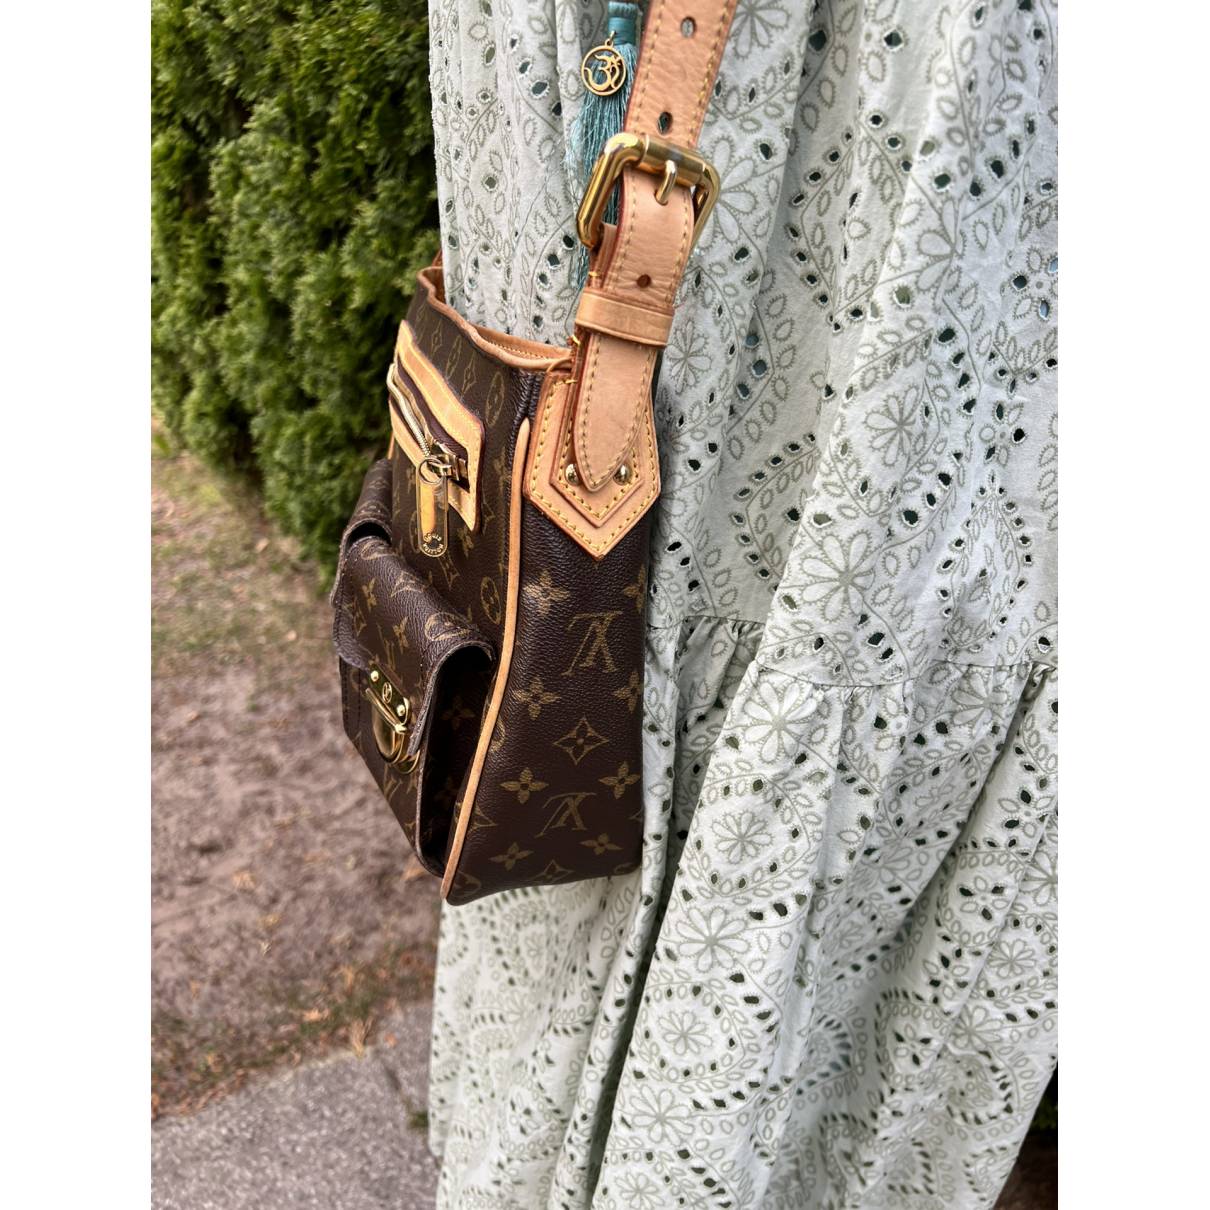 Louis Vuitton Hudson Leather Handbag